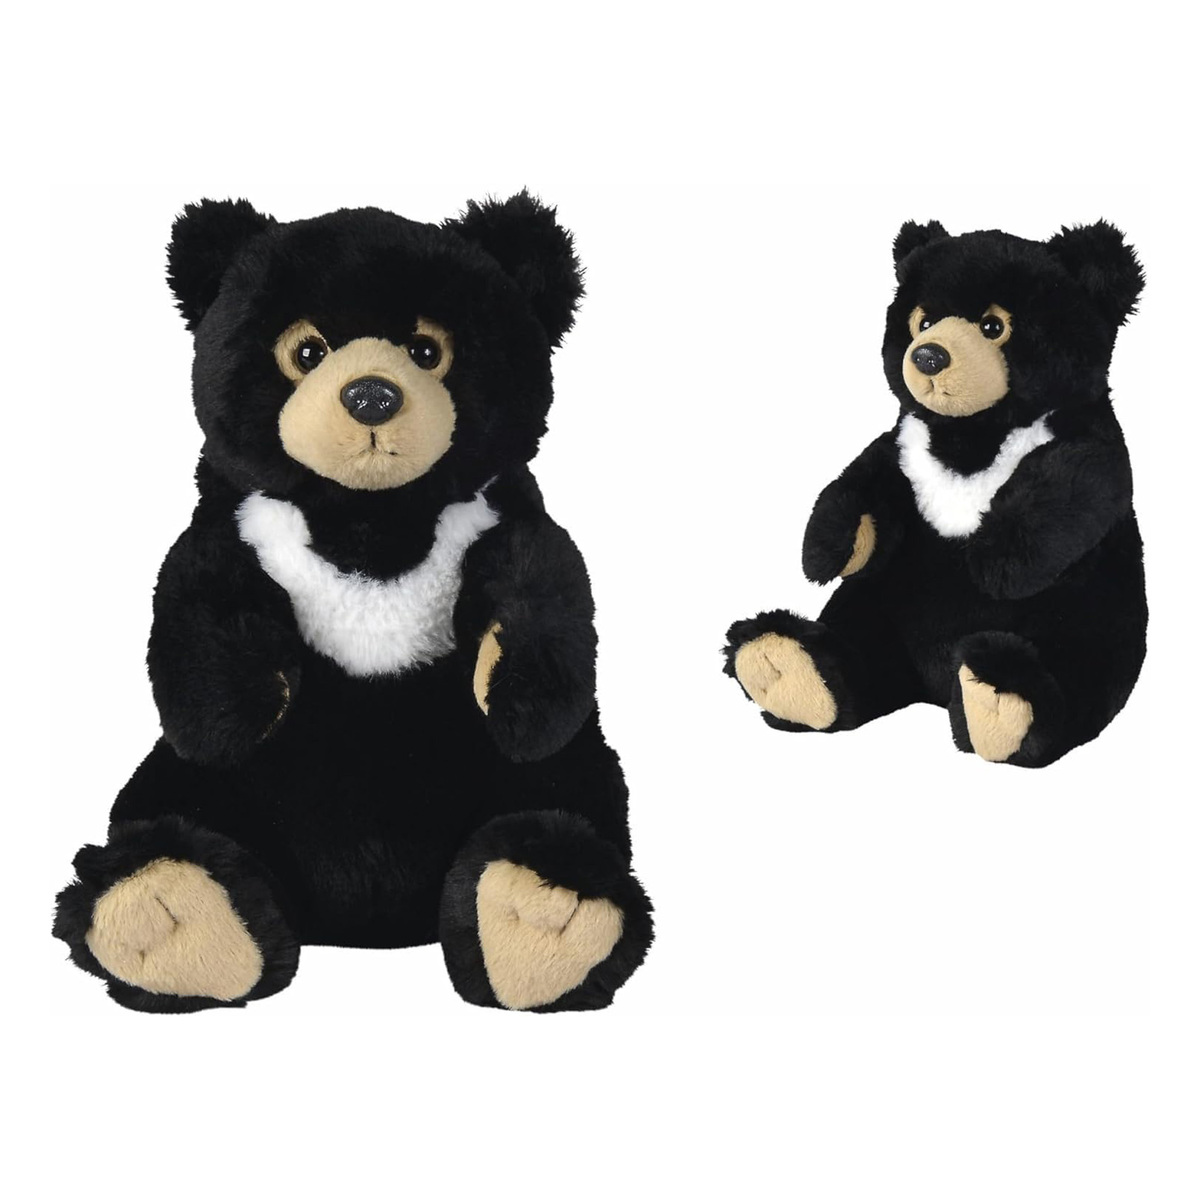 Nicotoy Bear Plush & Soft Toys, 25 cm, Black, 6305810022